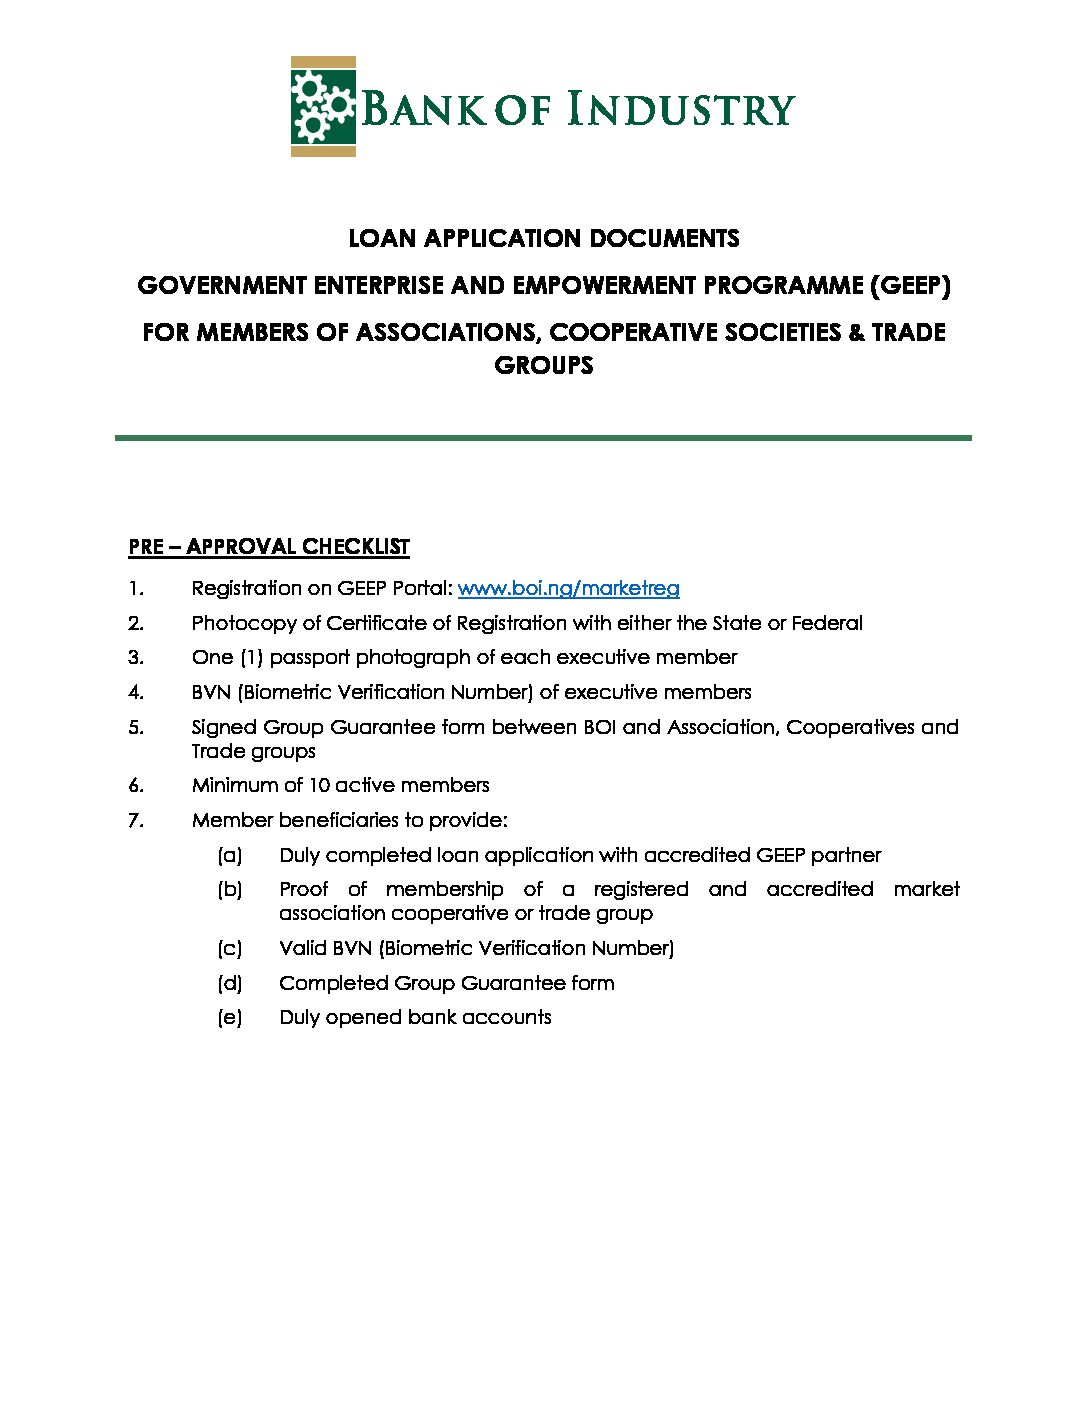 LOAN APPLICATION CHECKLIST GEEP 1 pdf Applyportal